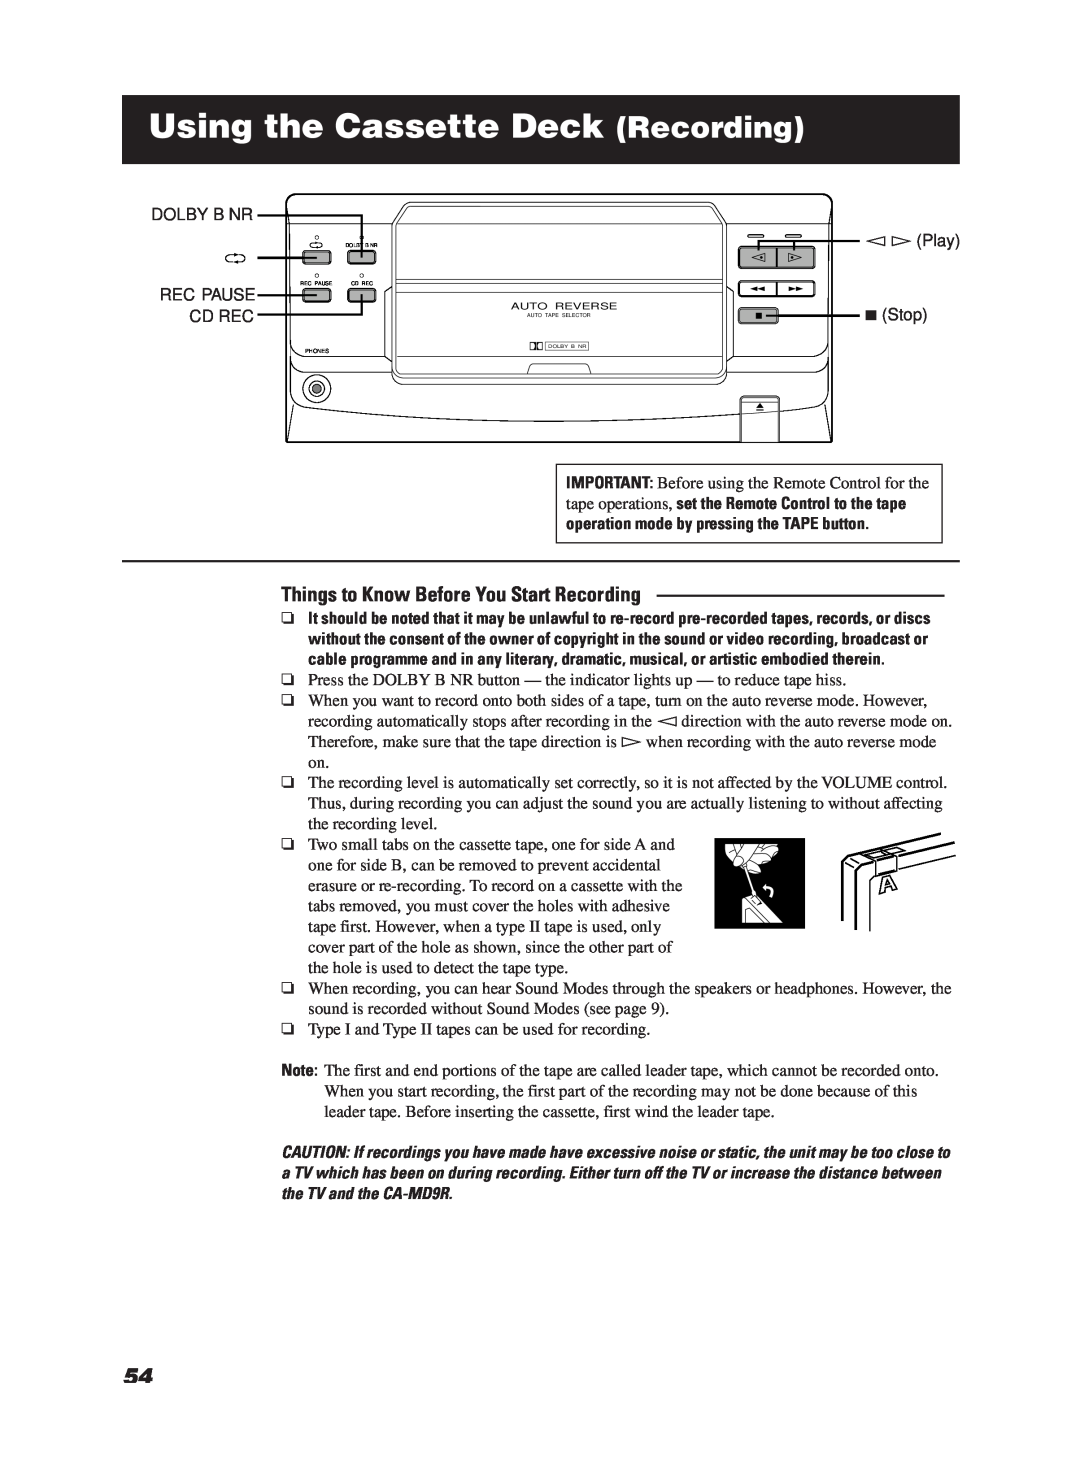 JVC LET0070-002A manual Using the Cassette Deck Recording, Dolby B Nr, Rec Pause, Cd Rec, ÛÜPlay 7Stop 